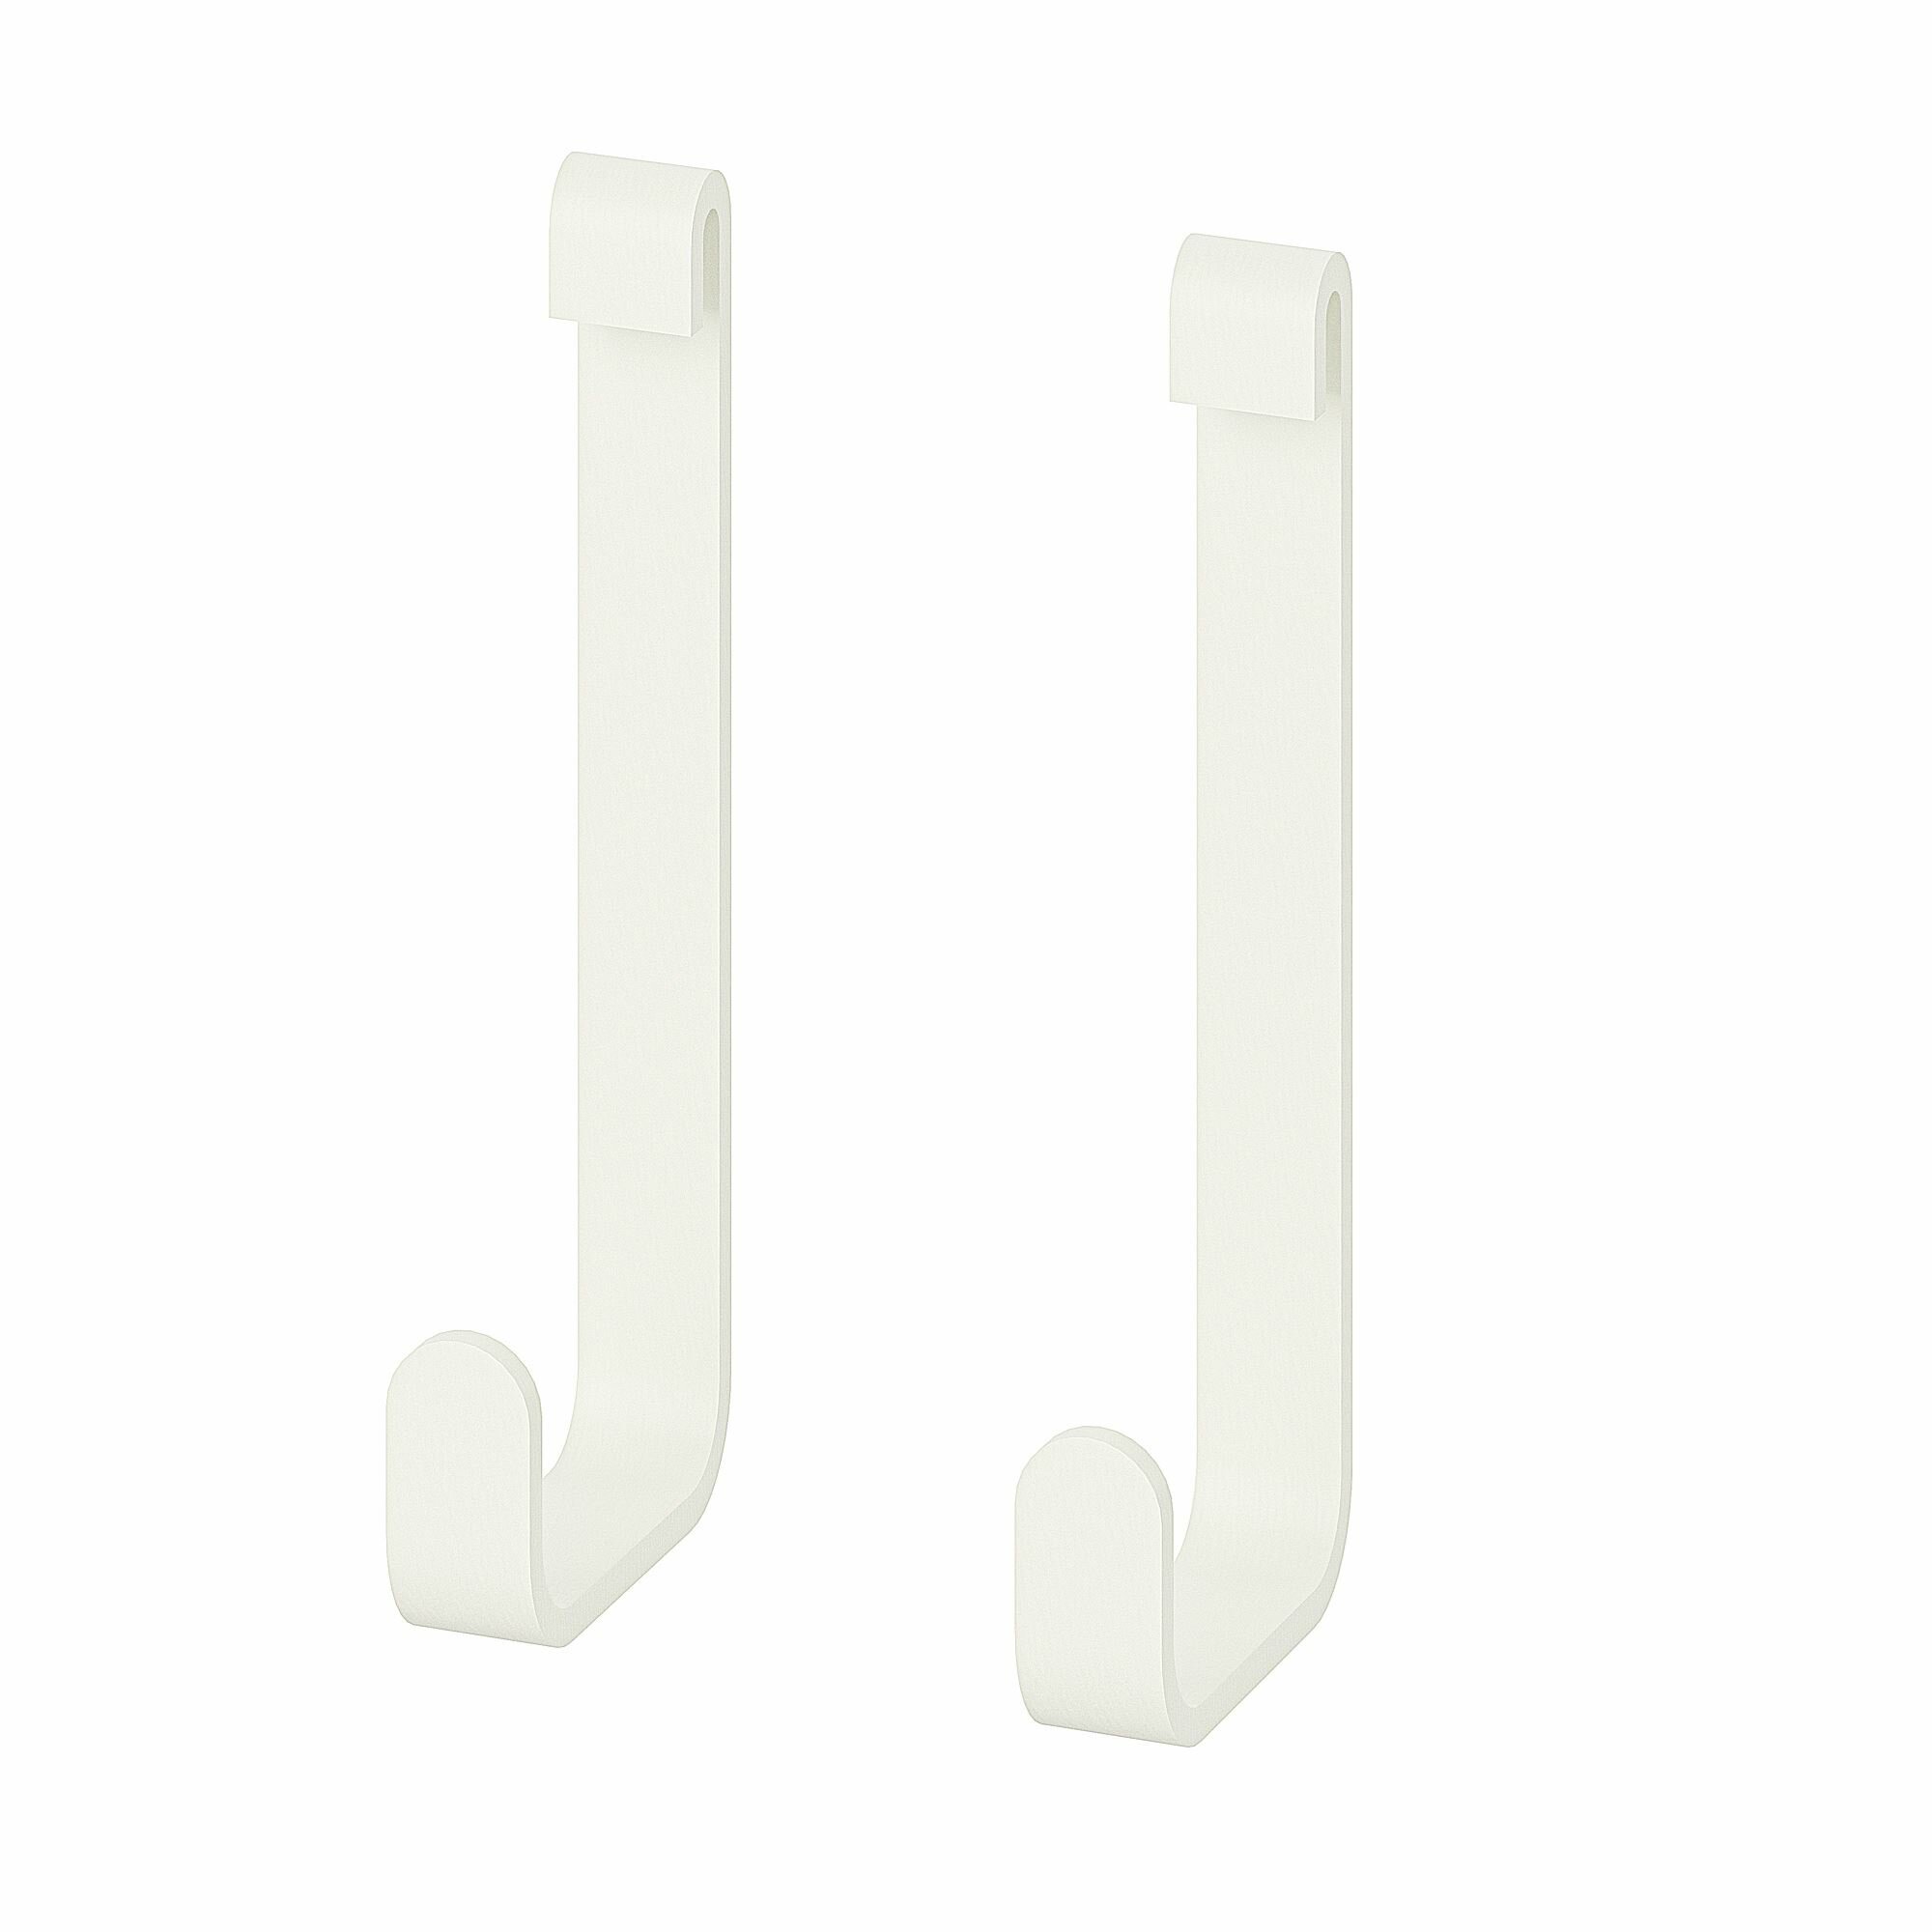 Икея / IKEA ENHET, энхет, крючок, белый, 6x24 мм